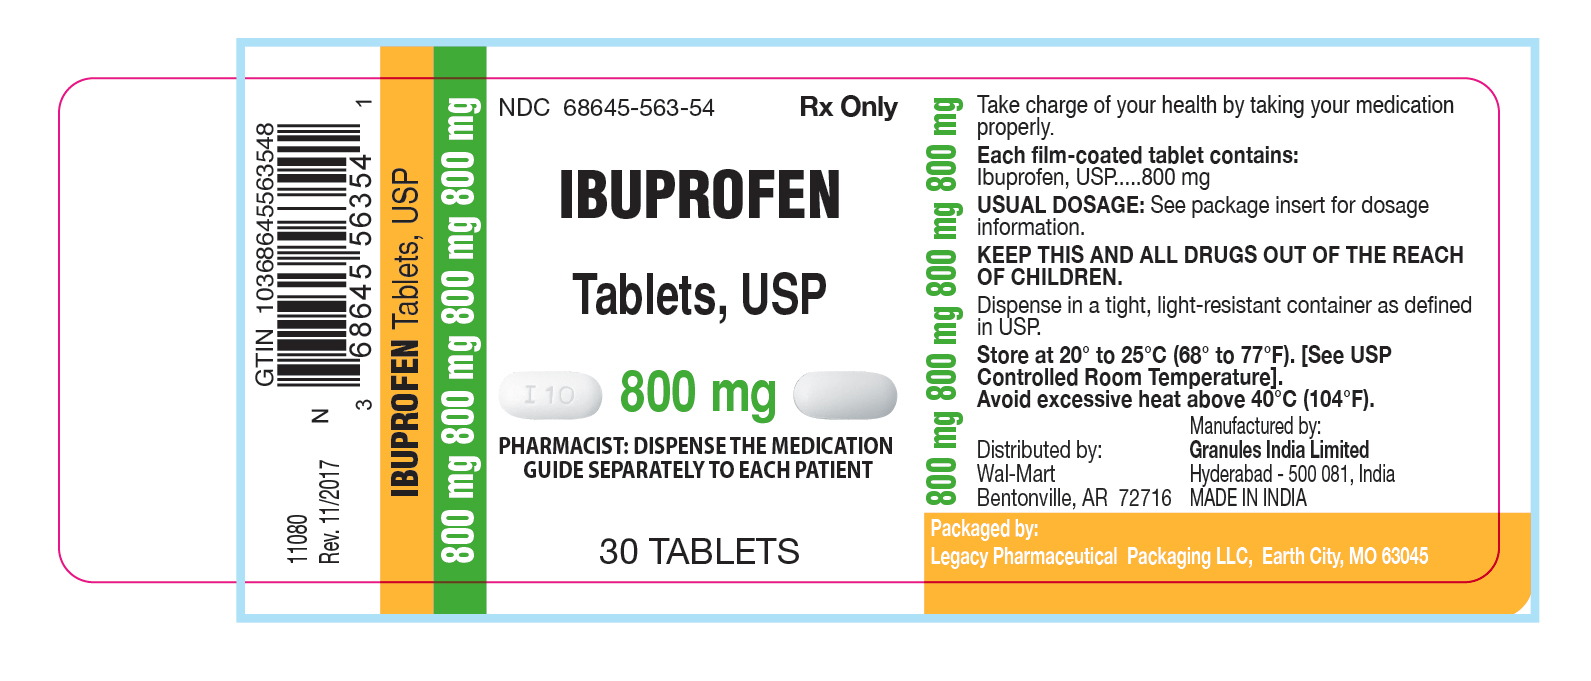 Ibuprofen Tablets, USP 800mg